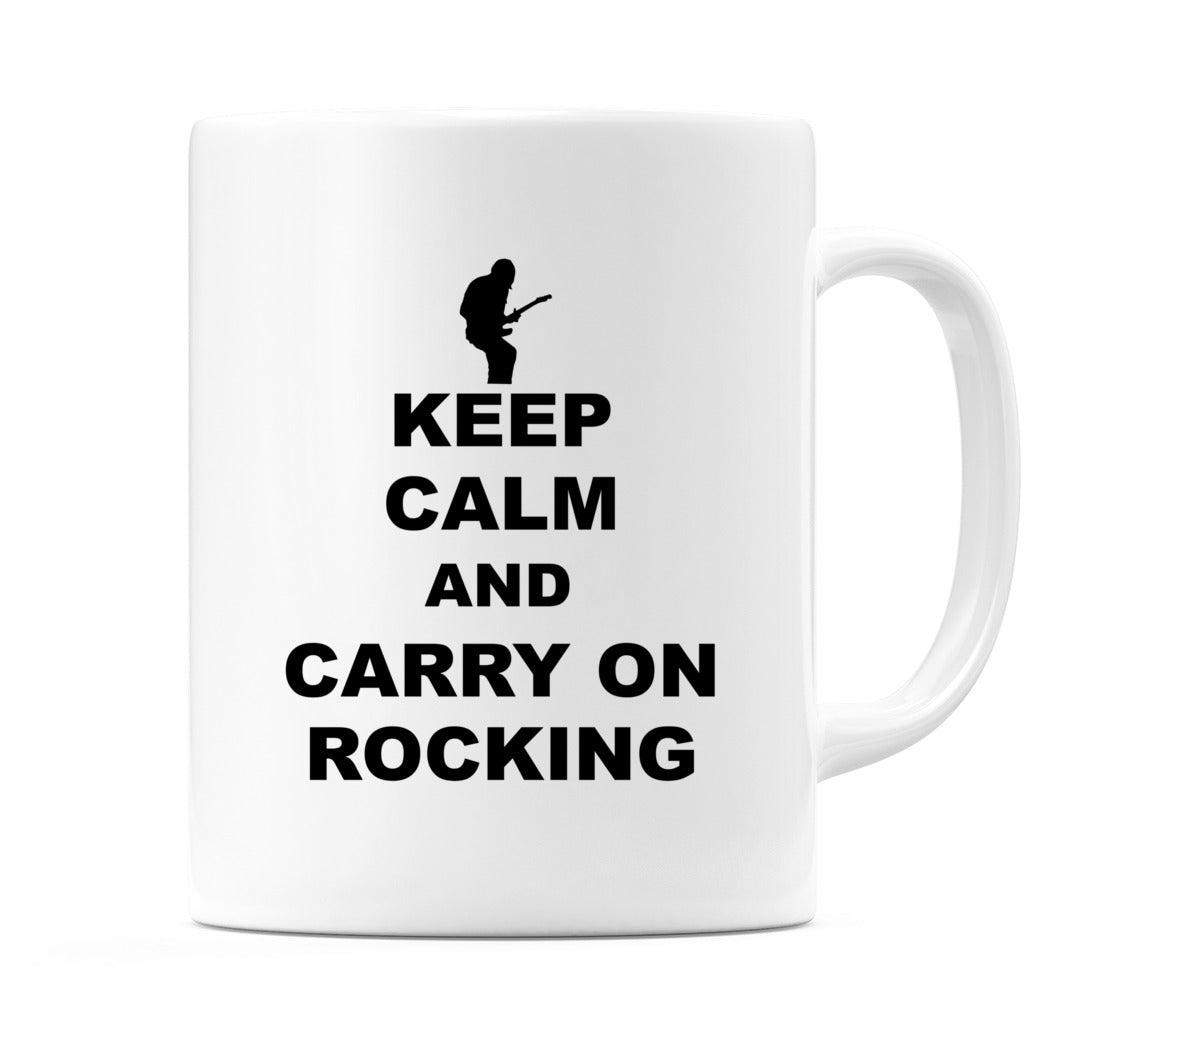 Keep Calm and Carry on Rocking Mug